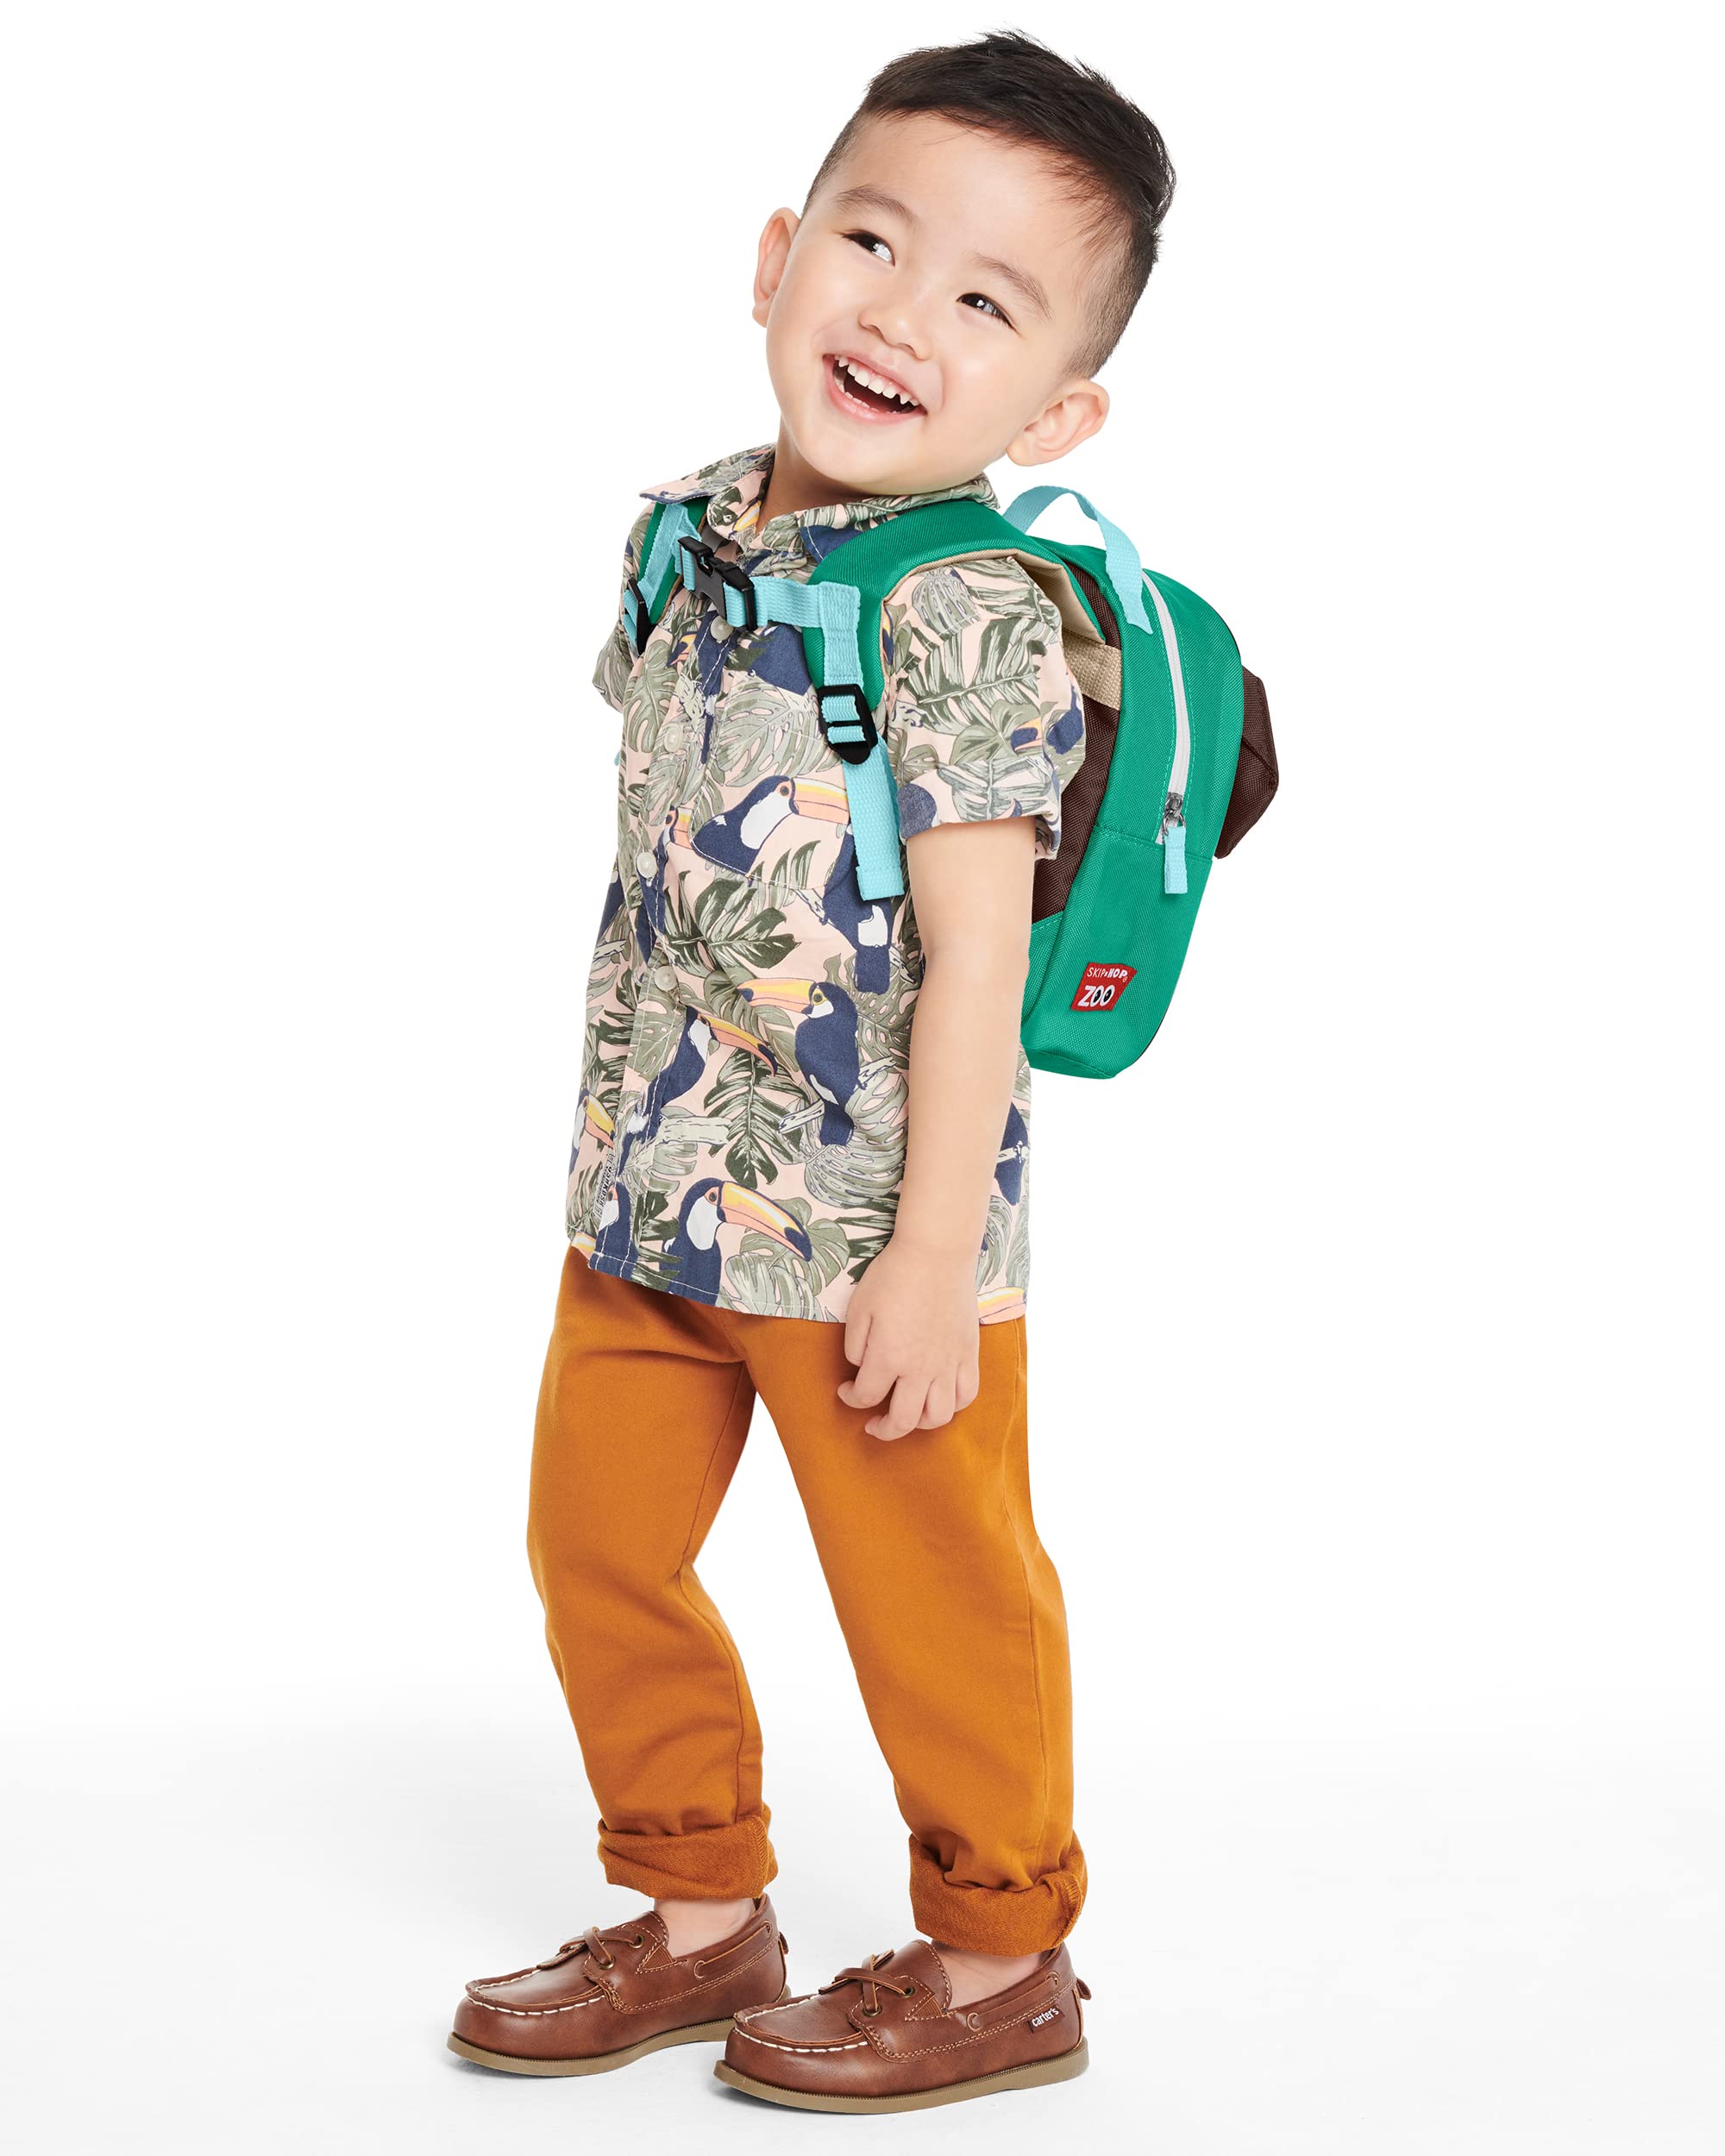 Skip Hop Toddler Backpack Leash, Zoo, Pug